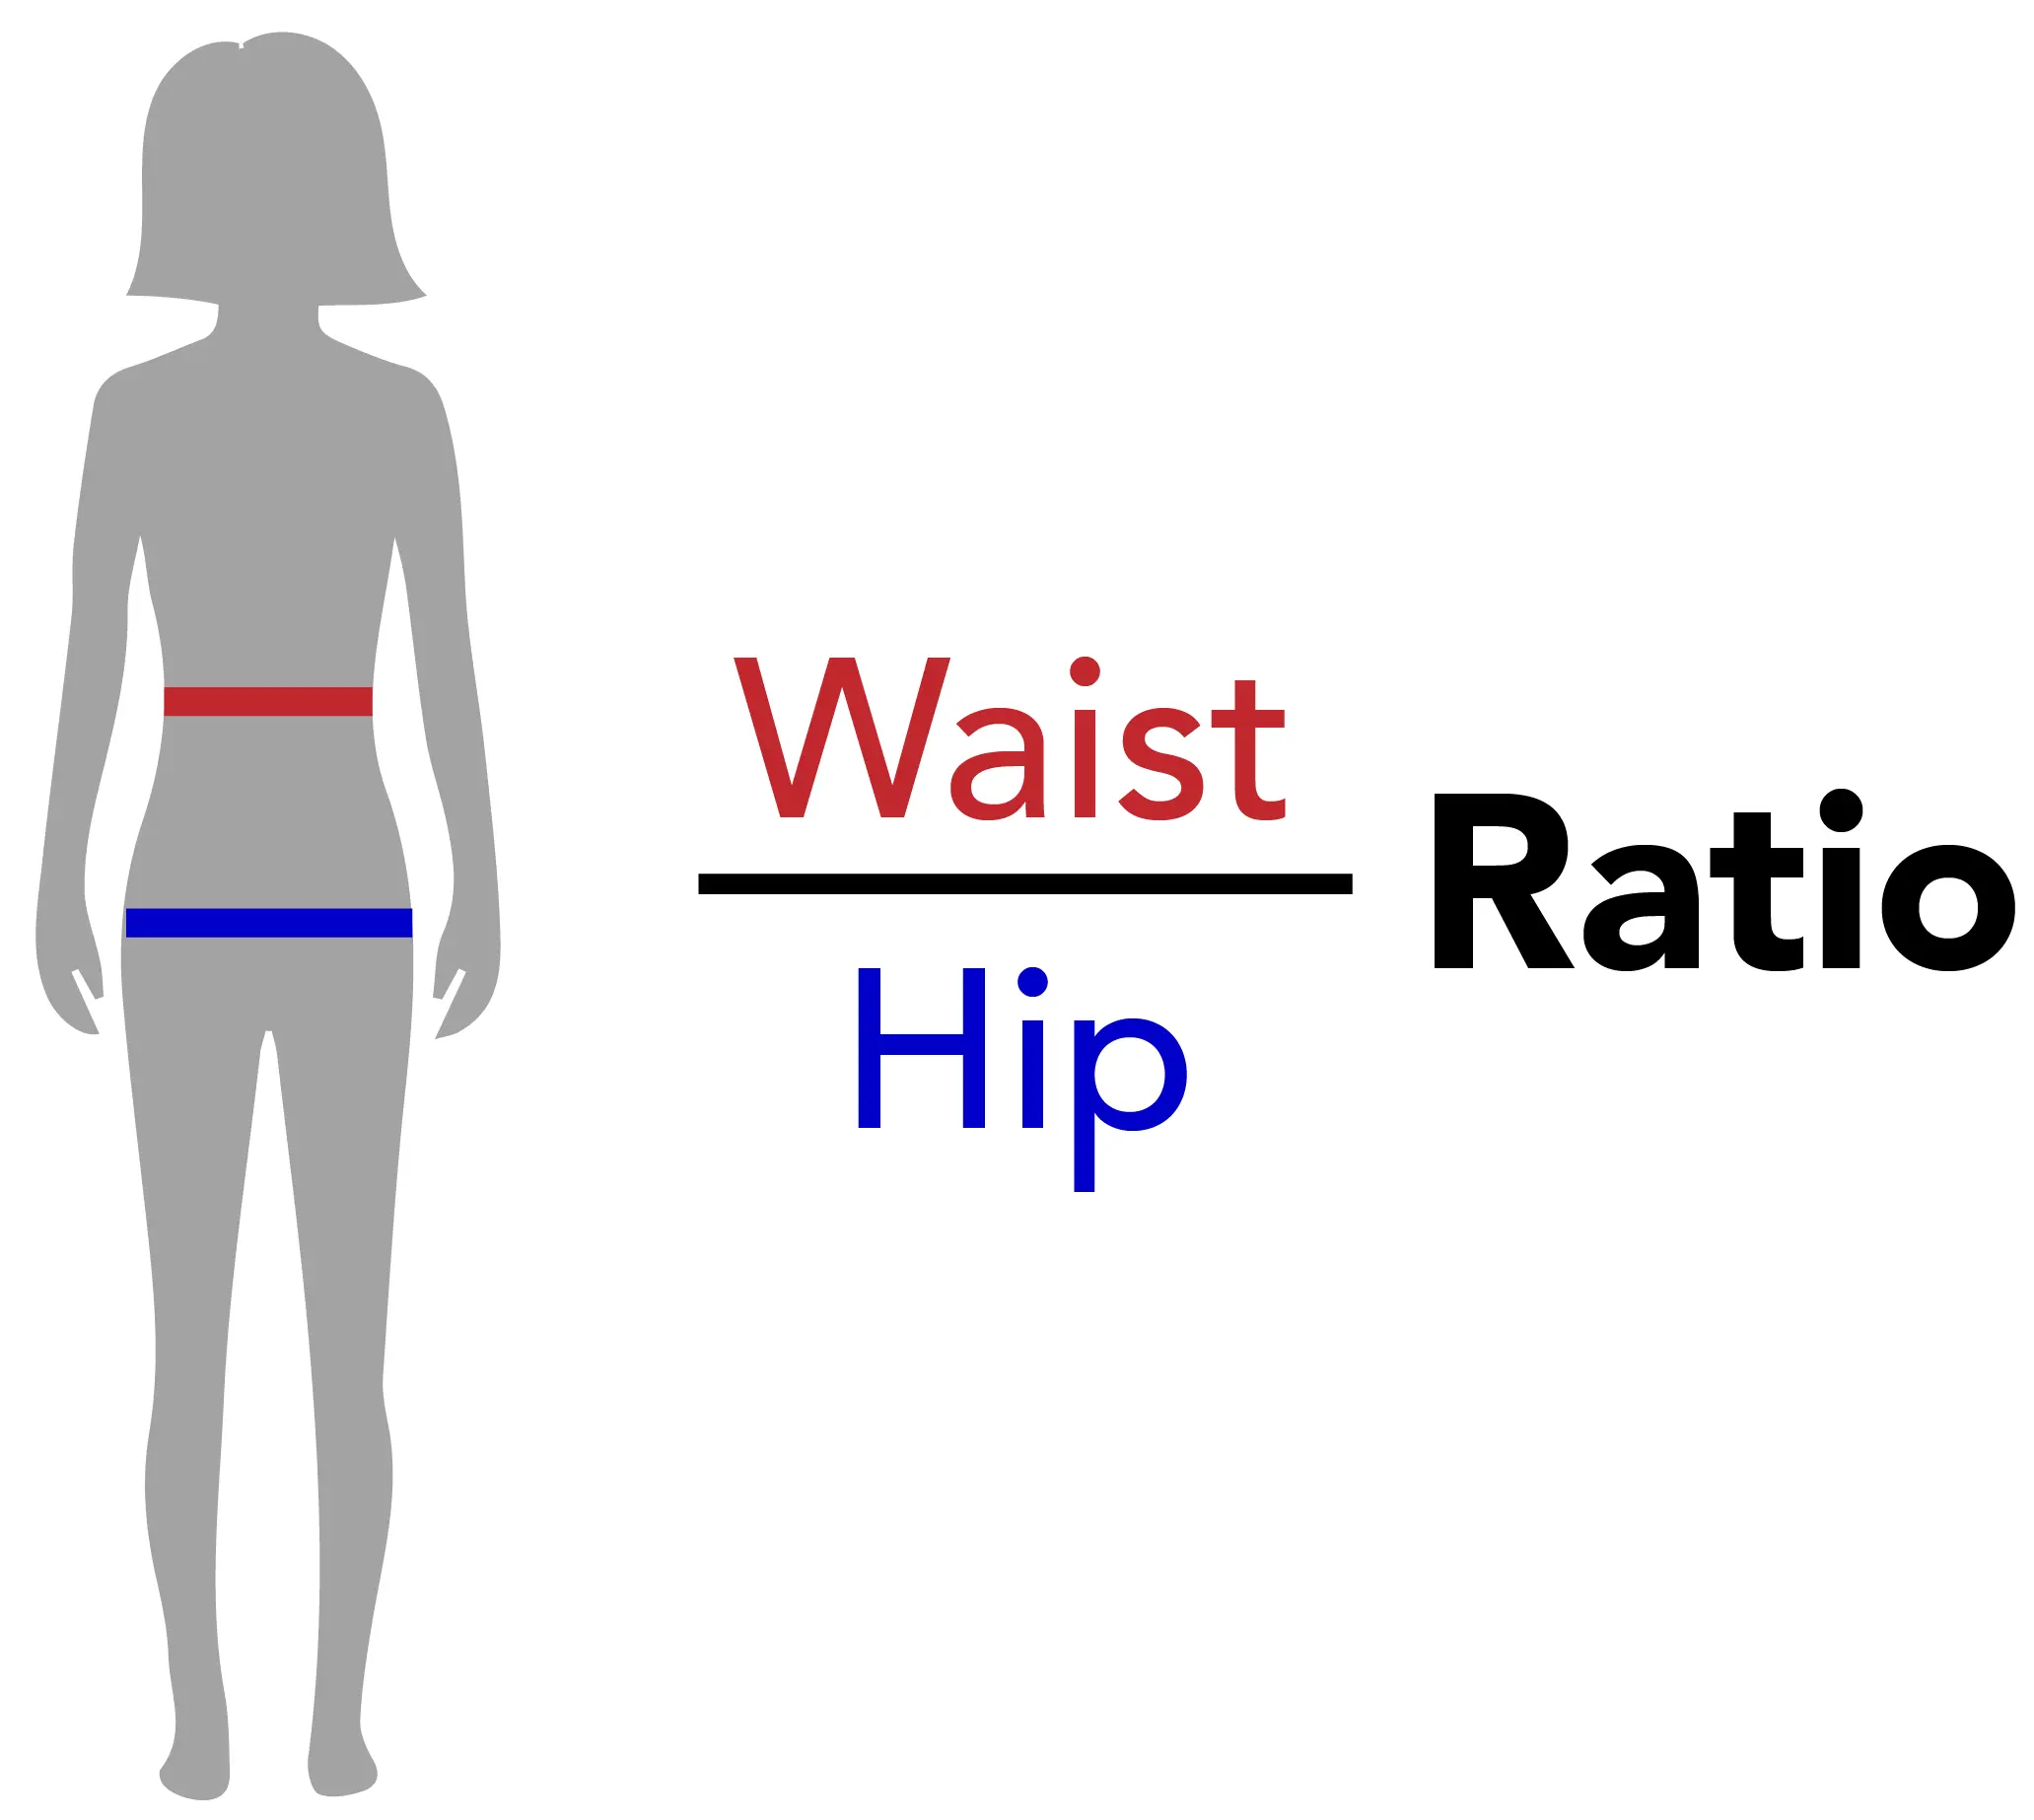 A high waist-to-hip ratio is considered unhealthy.